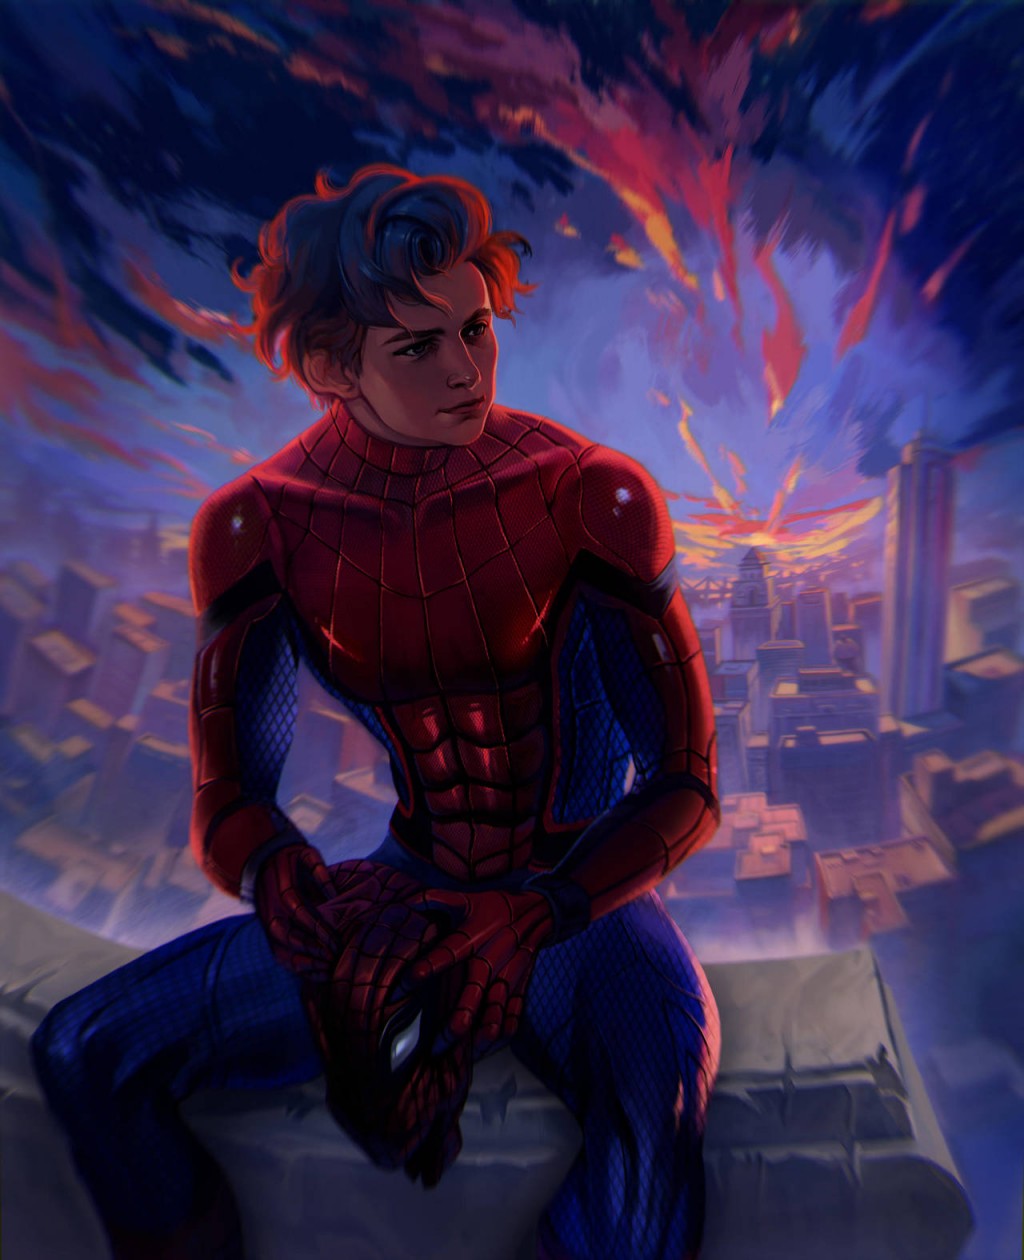 Digital Drawing of Spiderman